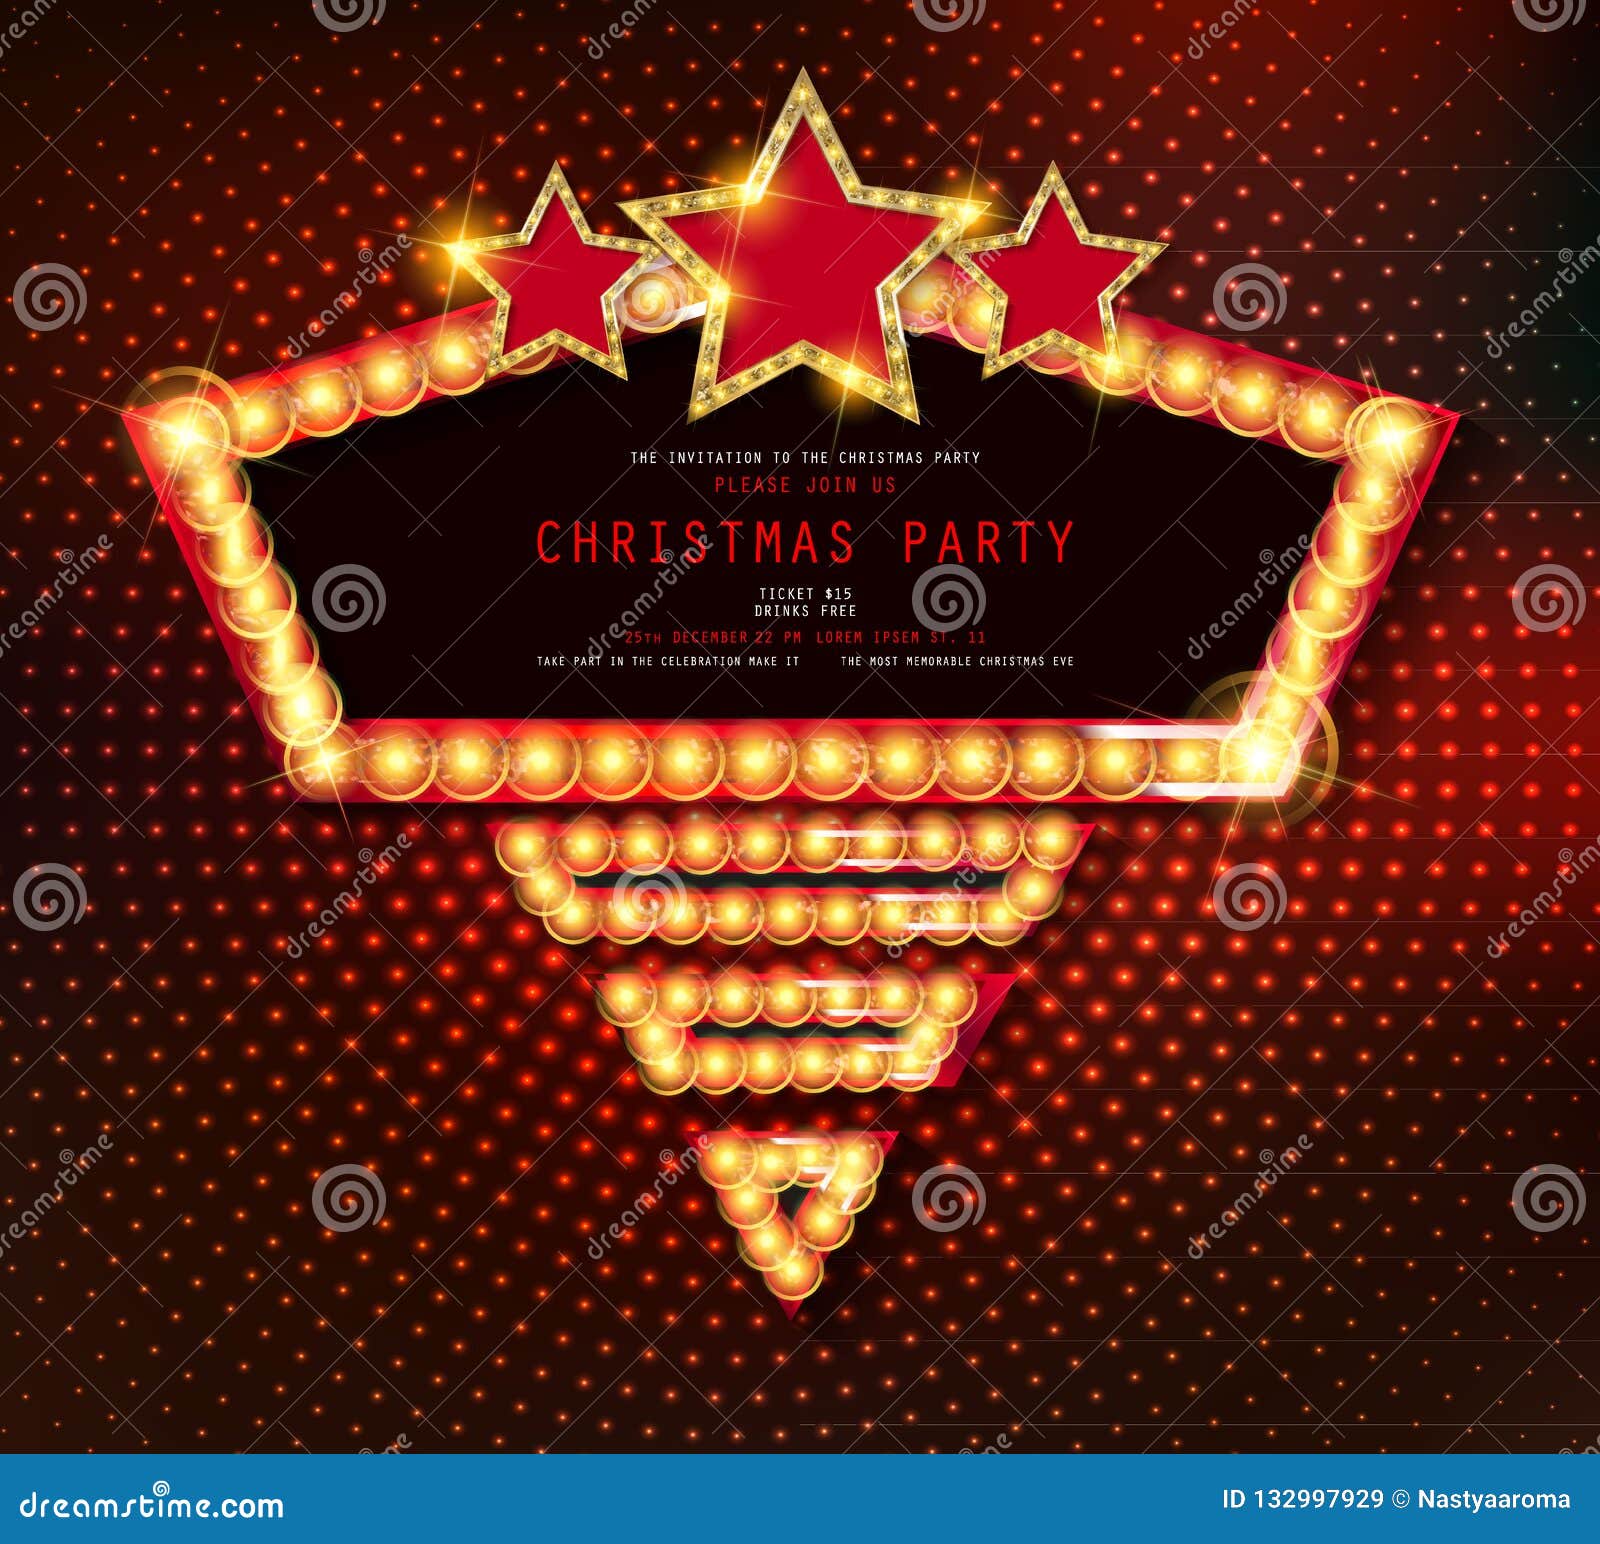 Invitation Merry Christmas Party Stock Illustration - Illustration of ...